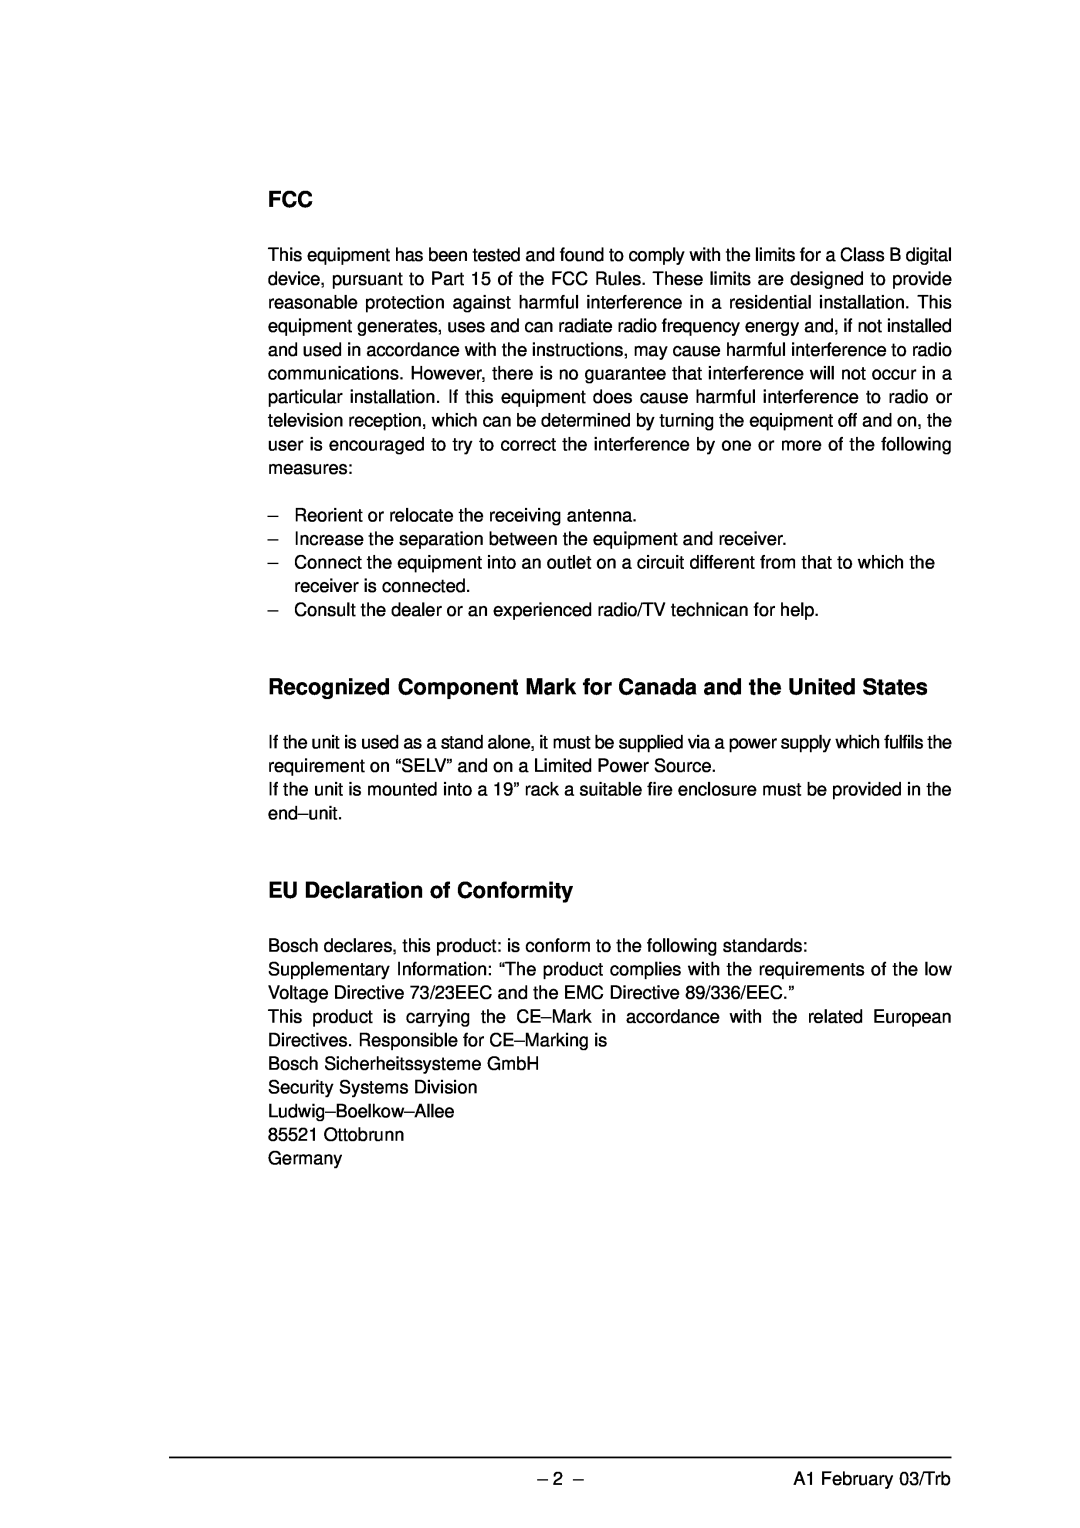 Bosch Appliances VMD01 M60 NTSC, VMD01 M50 PAL manual EU Declaration of Conformity 